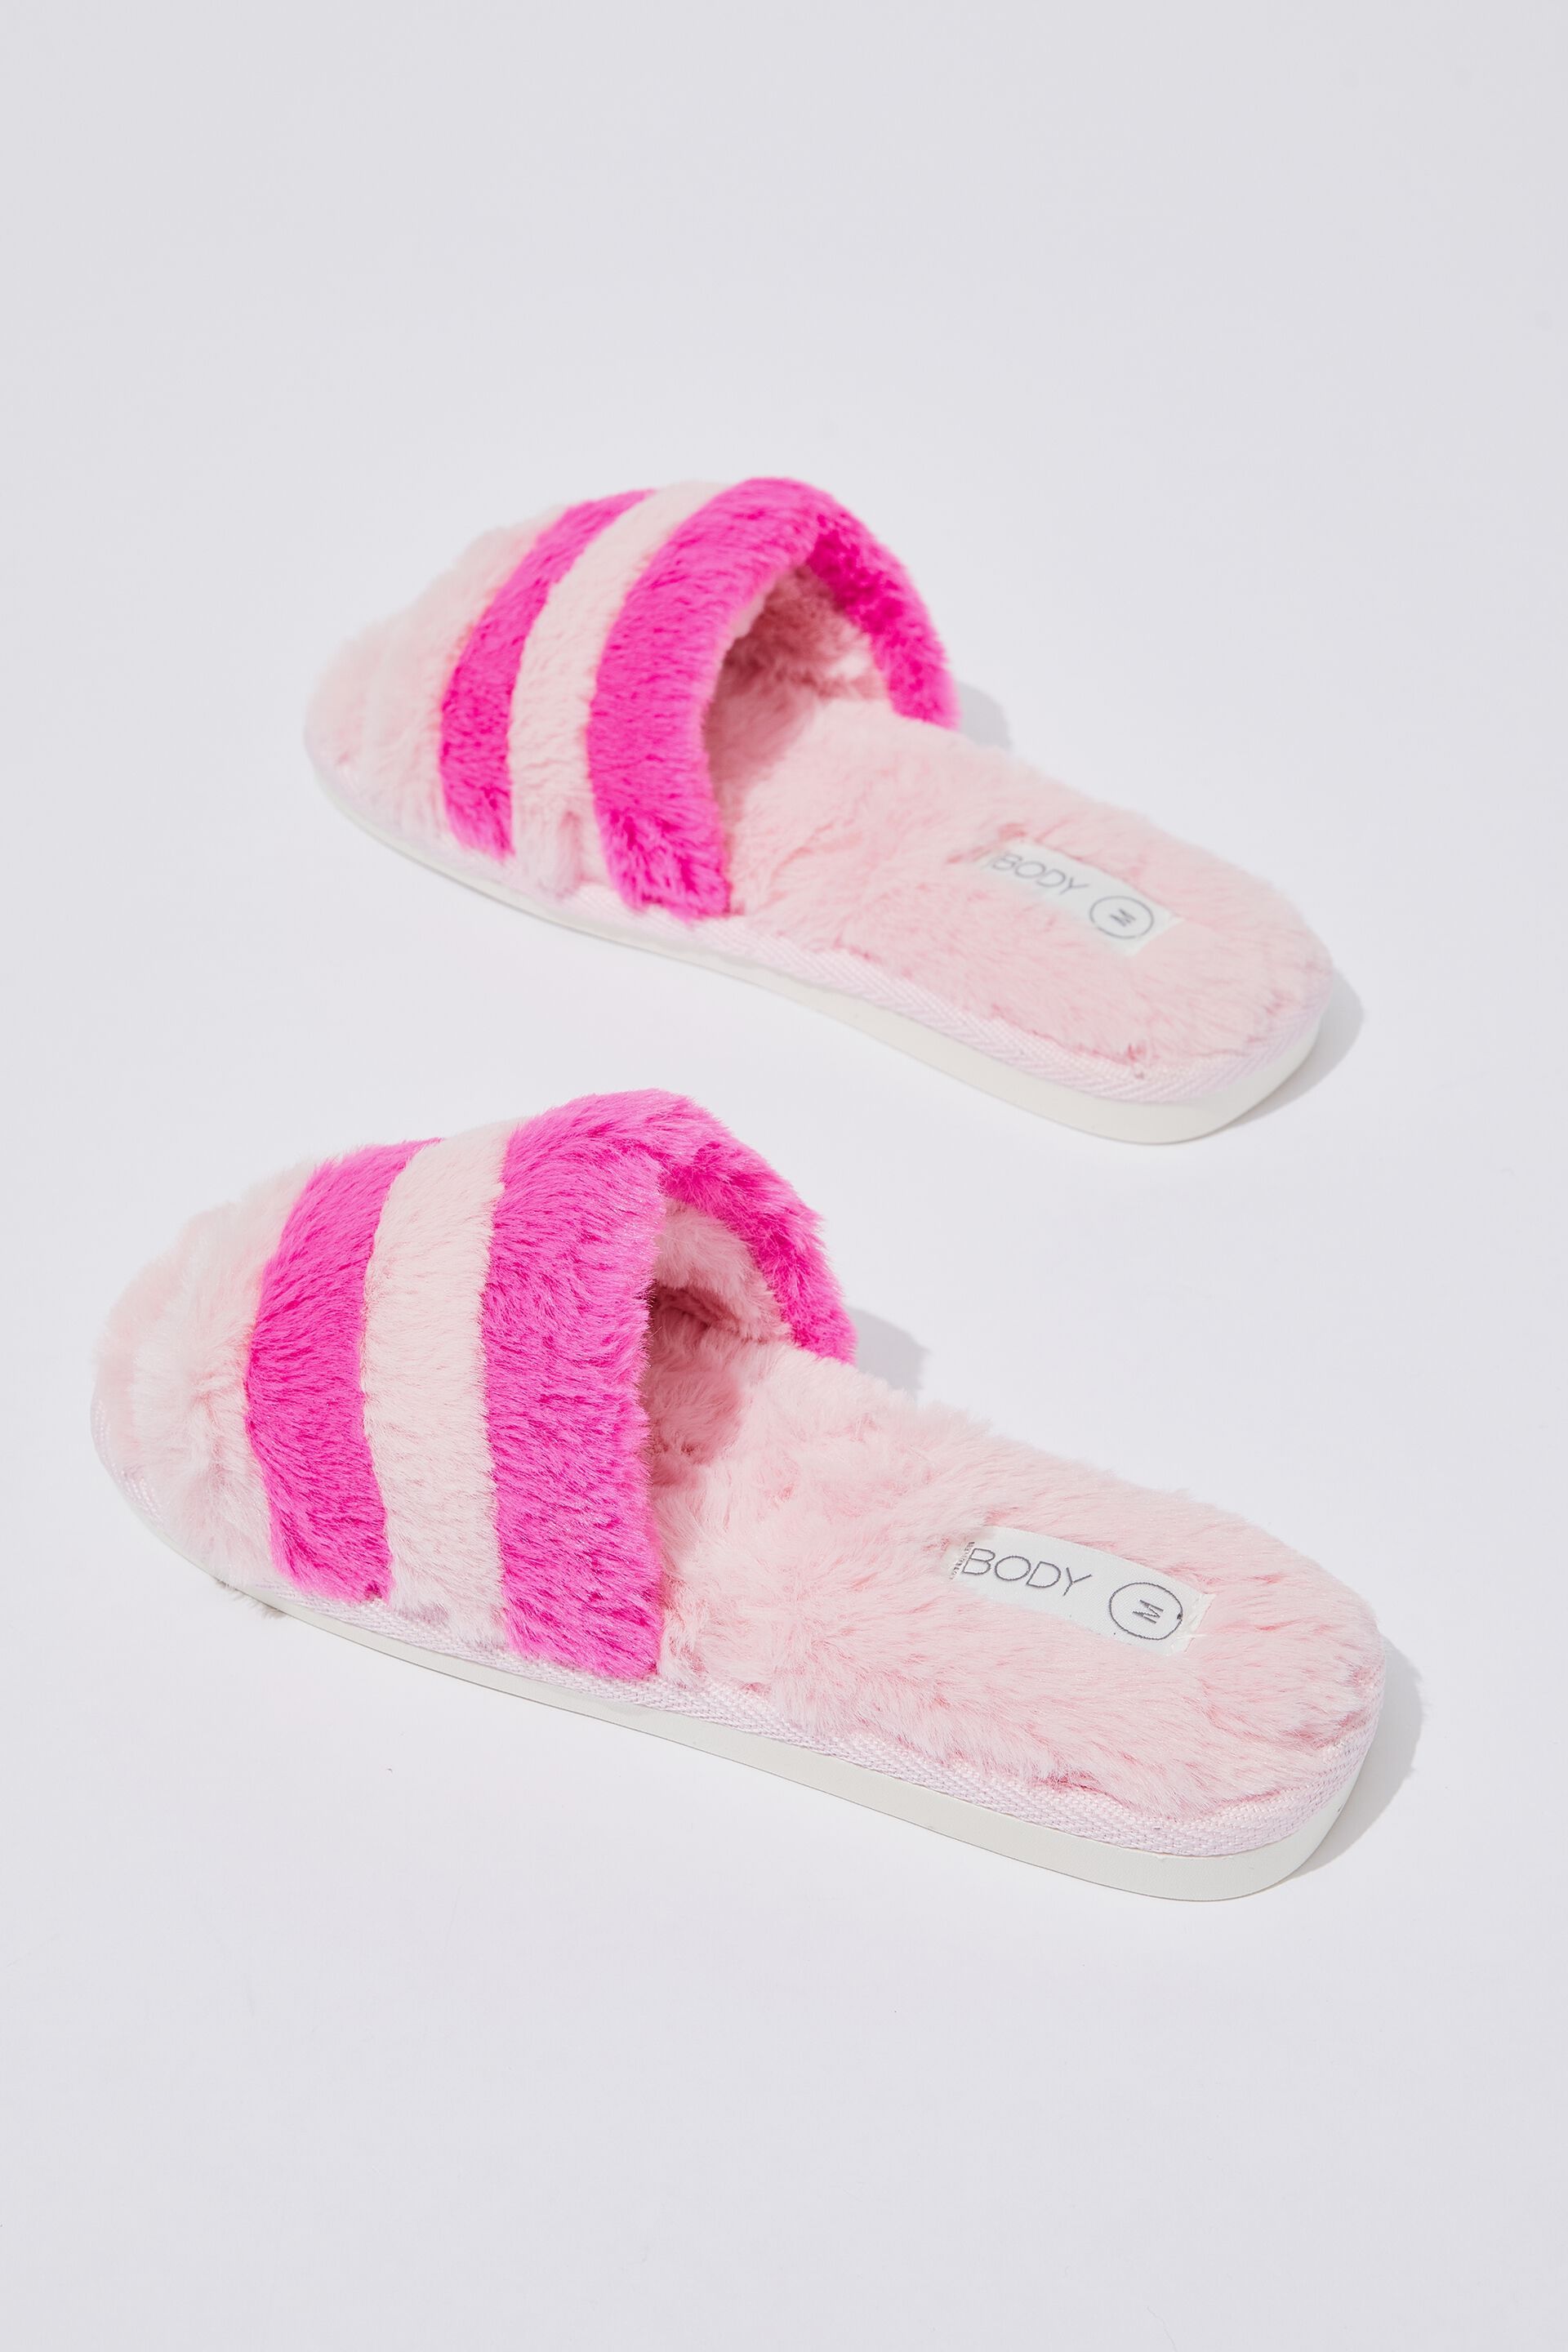 Snuggies Girls Slippers Pink